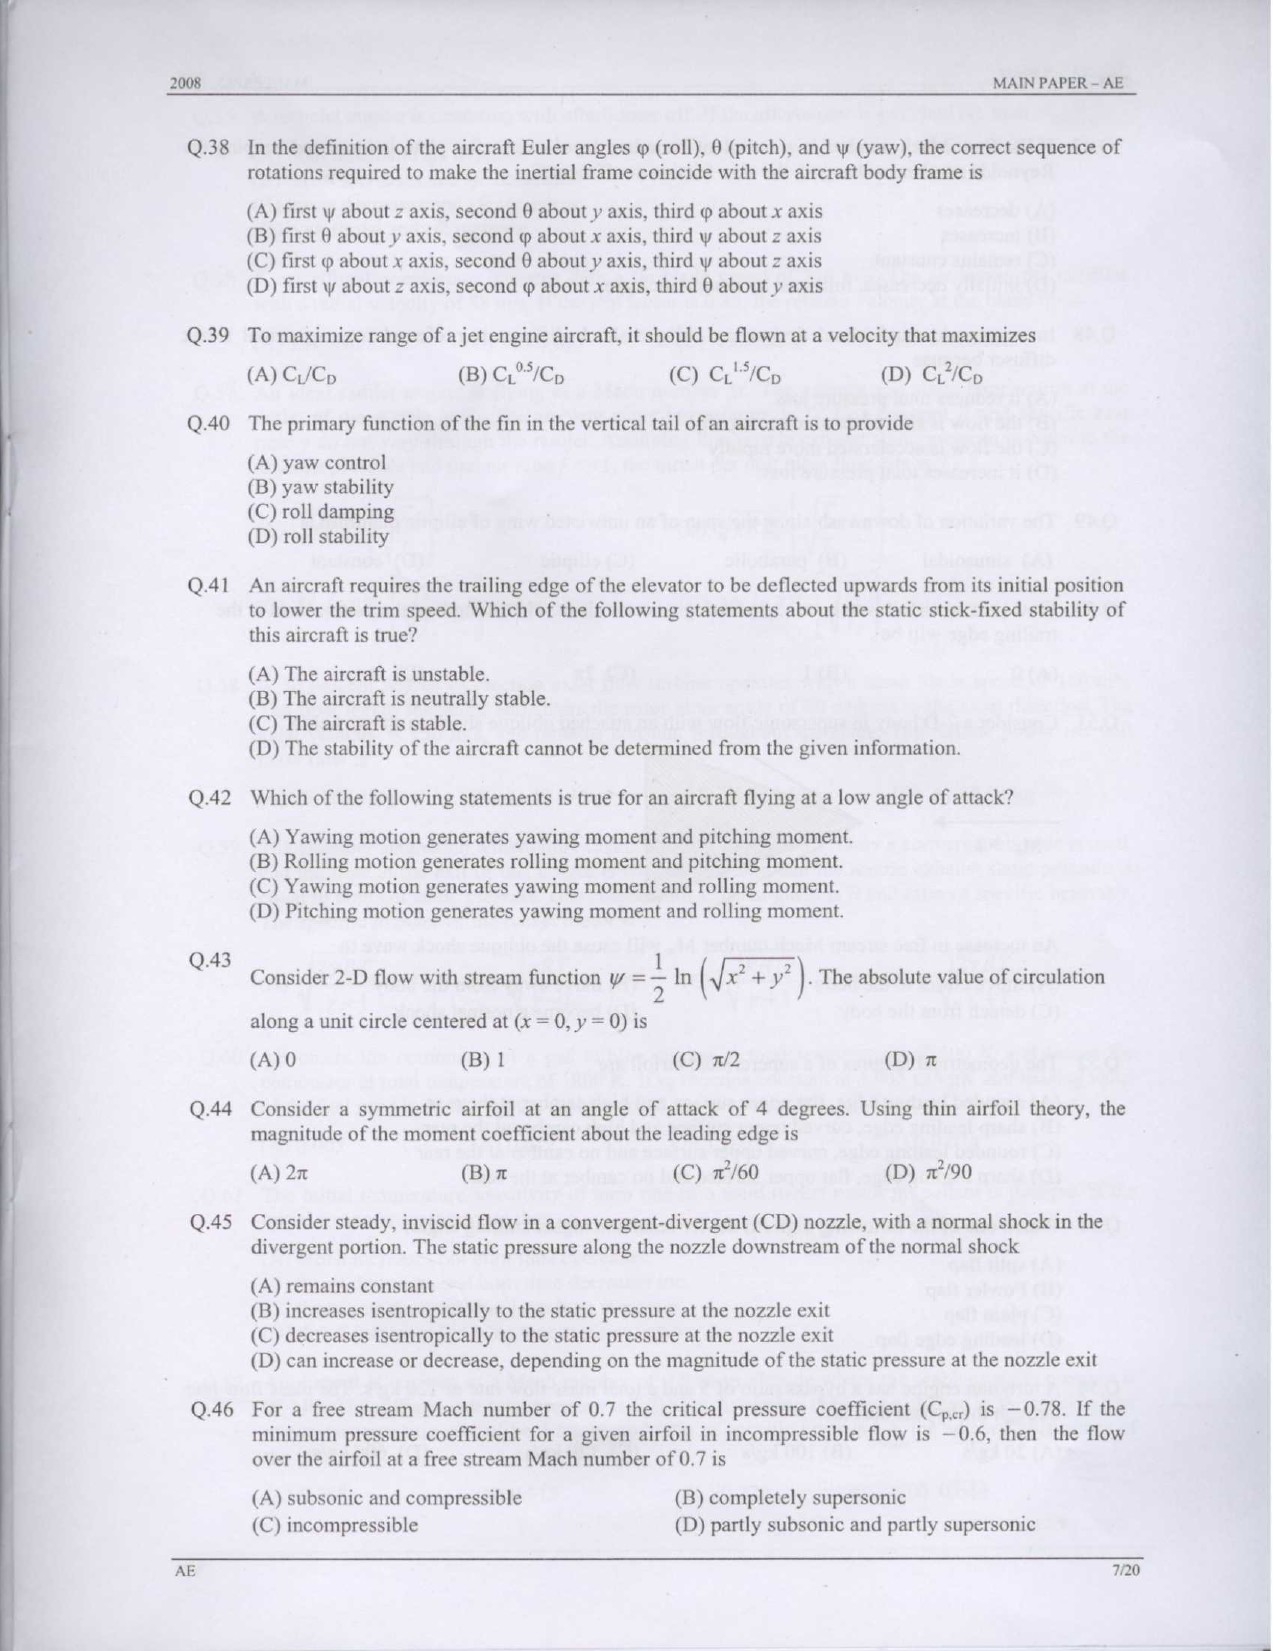 GATE Exam 2008 Aerospace Engineering Question Paper 7